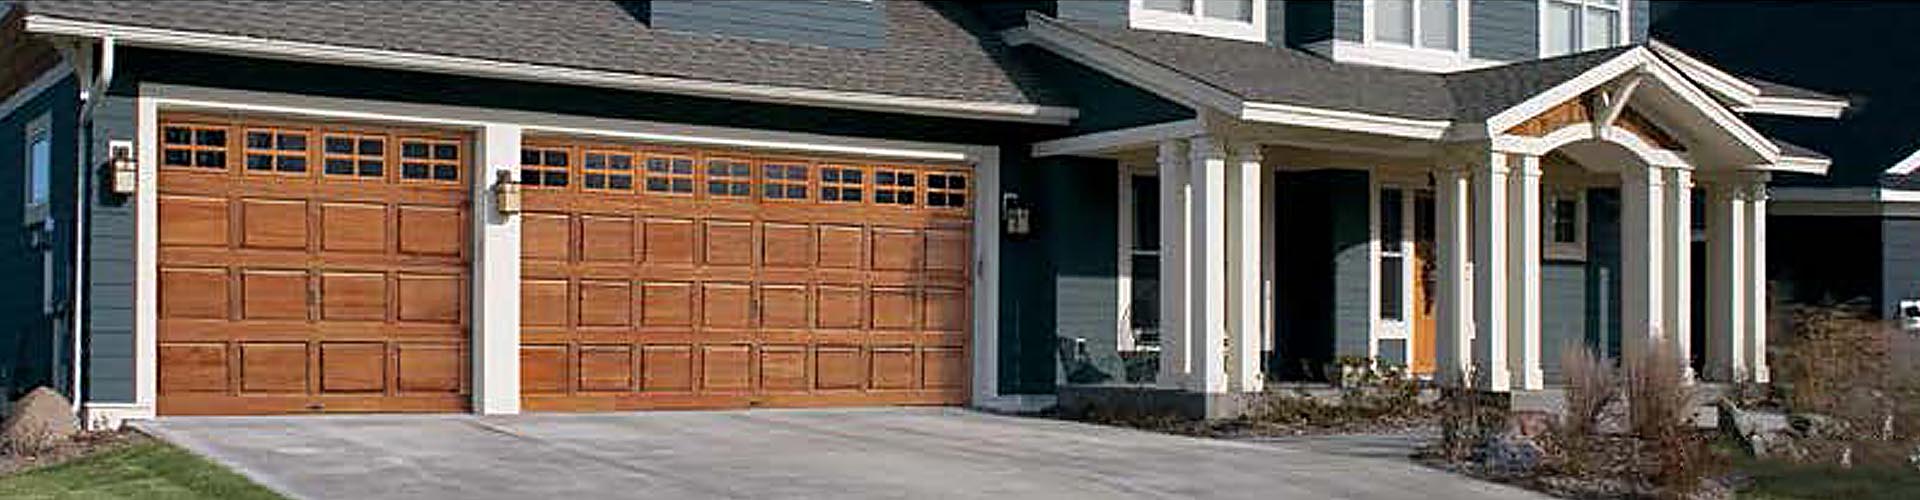 Garage Doors in Edmond, El Reno, Mustang OK, OKC, Oklahoma City 